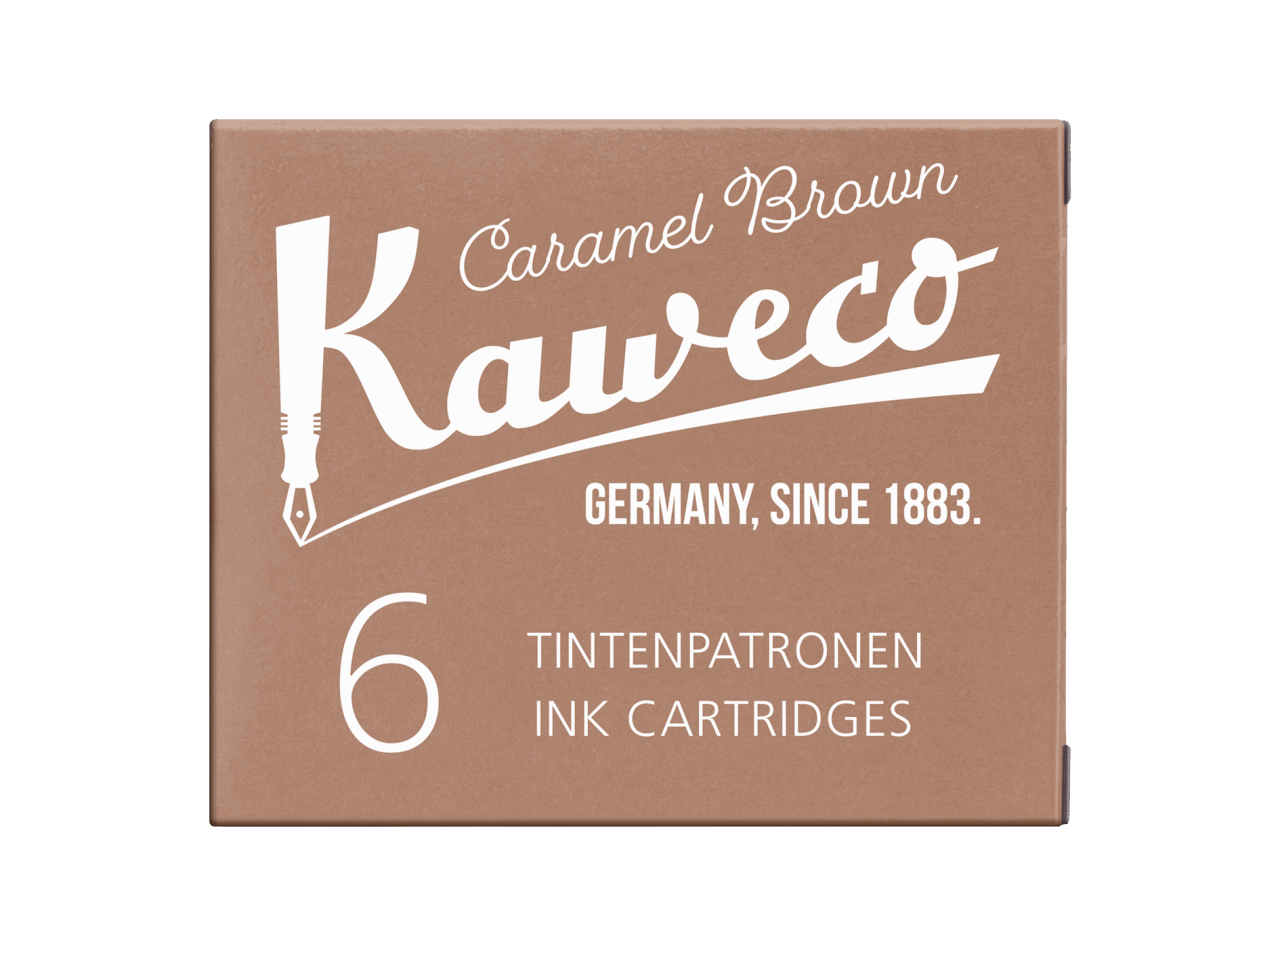 Kaweco Tintenpatronen 6 Stück - Karamel Braun